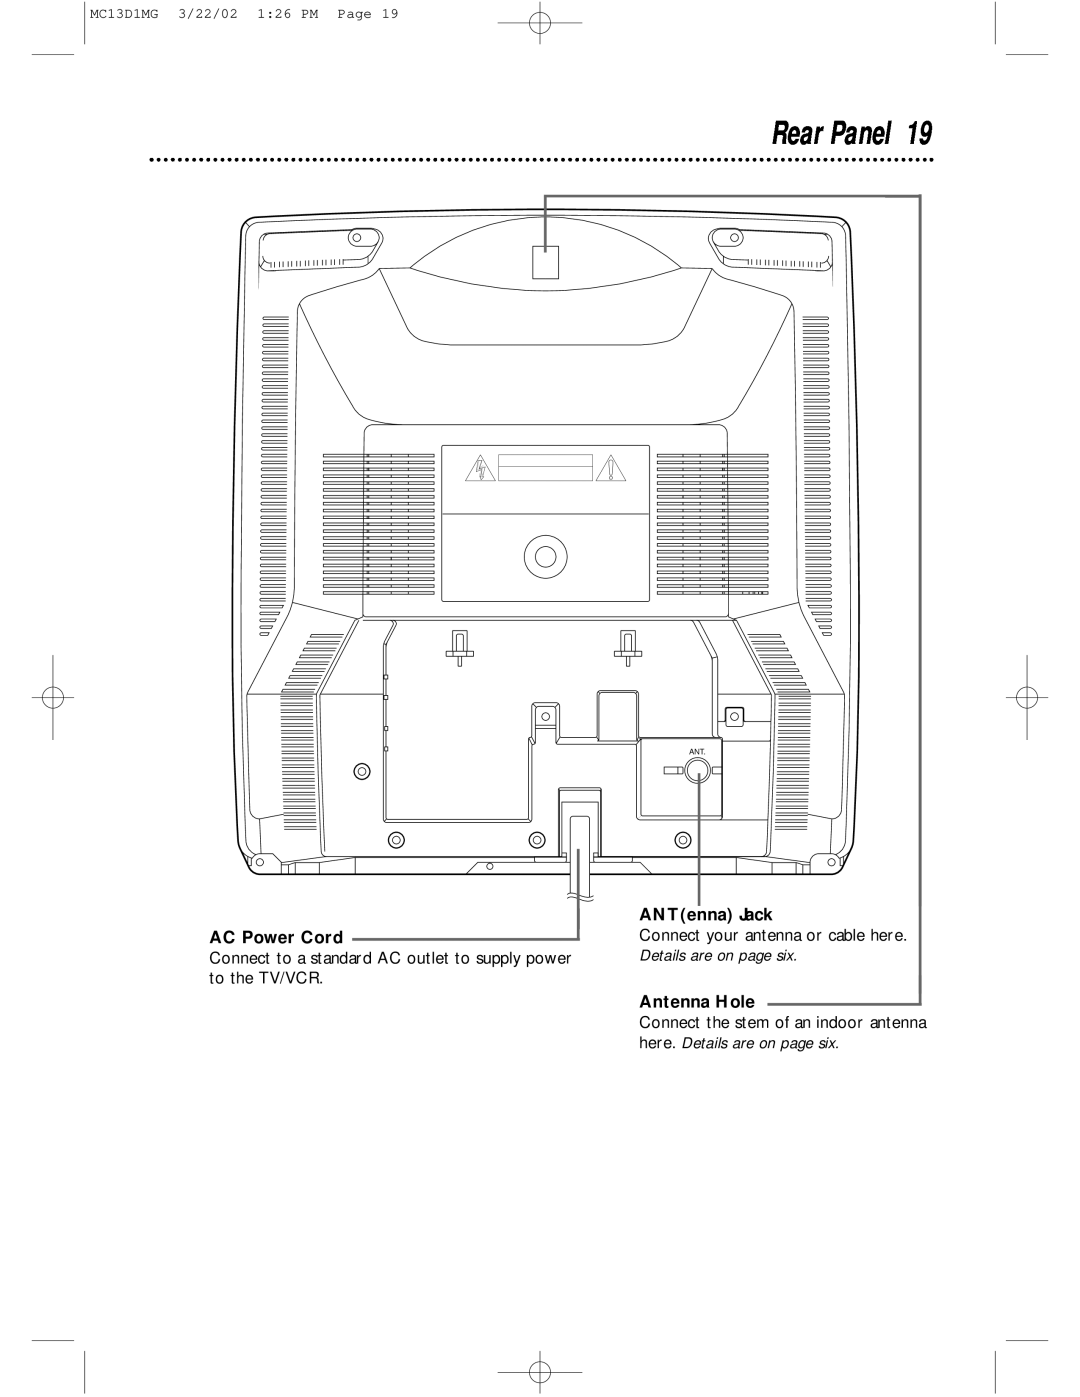 Magnavox MC19D1MG owner manual Rear Panel, AC Power Cord, ANTenna Jack, Antenna Hole, MC13D1MG 3/22/02 126 PM Page 